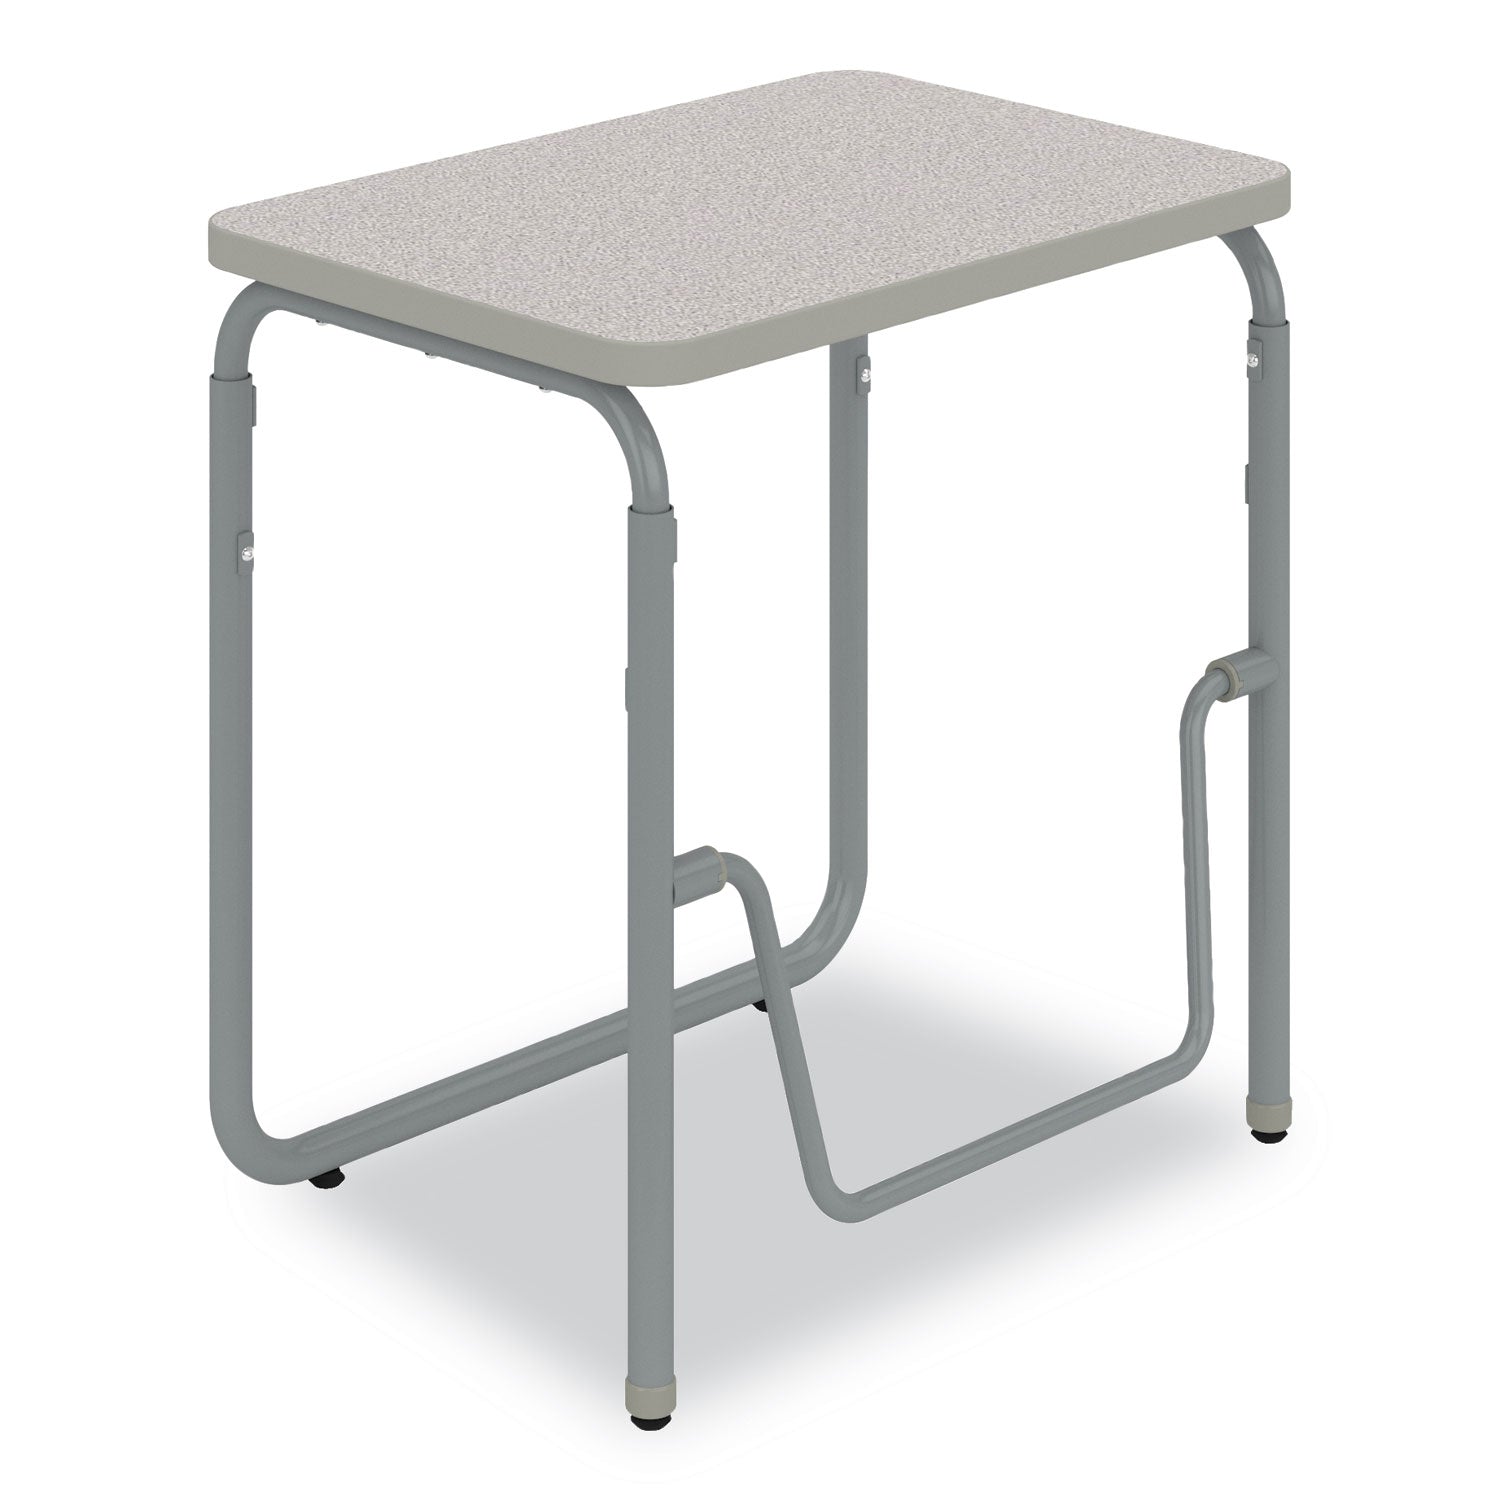 alphabetter-20-height-adjustable-student-desk-with-pendulum-bar-2775-x-1975-x-29-to-43-pebble-gray_saf1223gr - 4